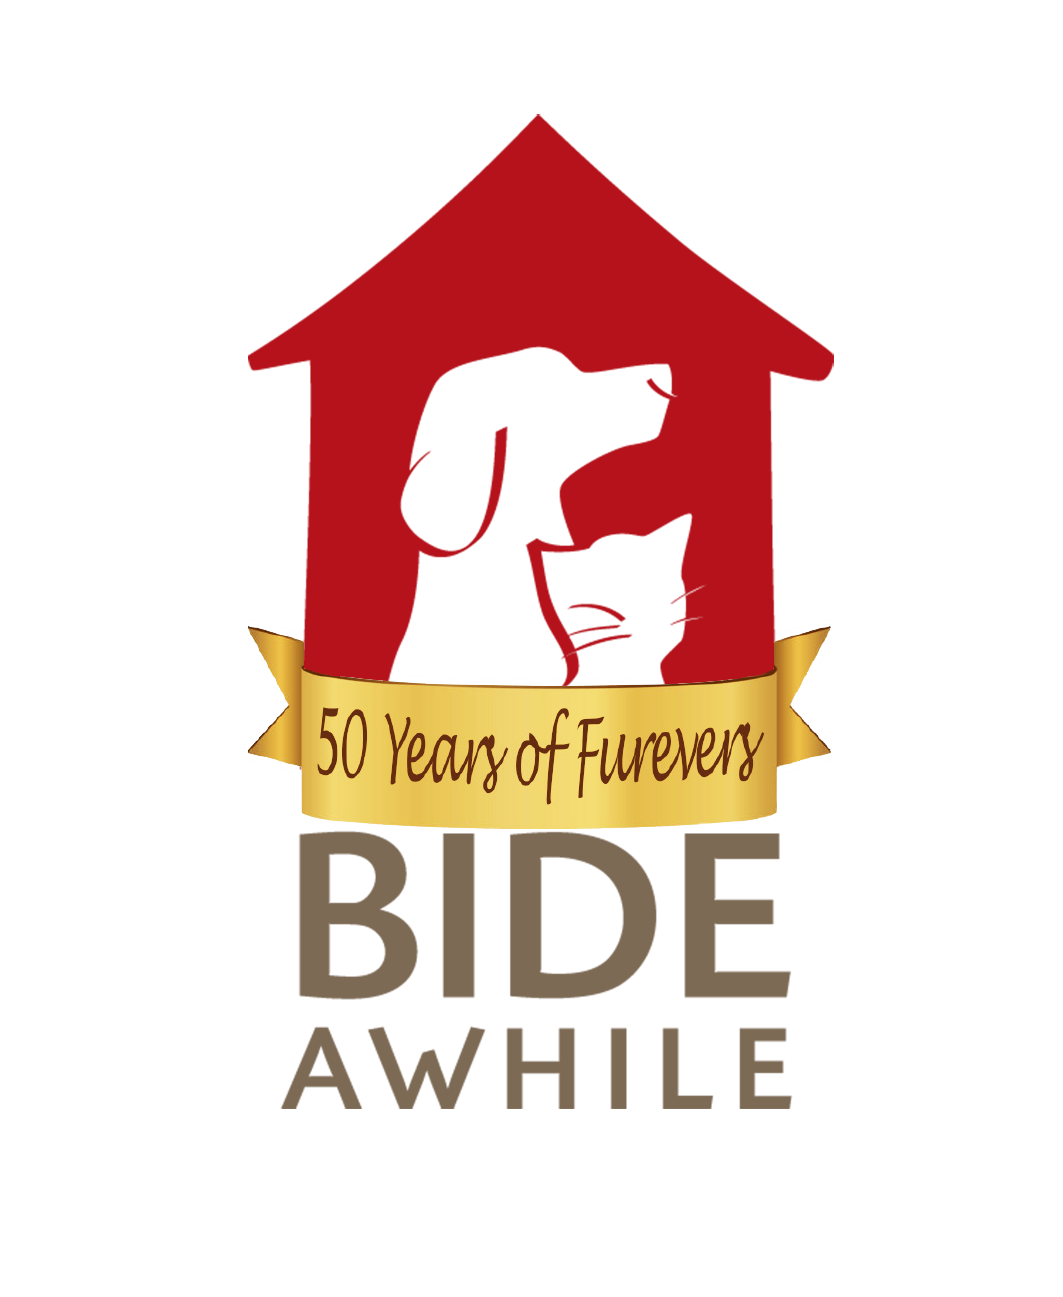 Bide Awhile Animal Shelter Society - Nonprofit Organization